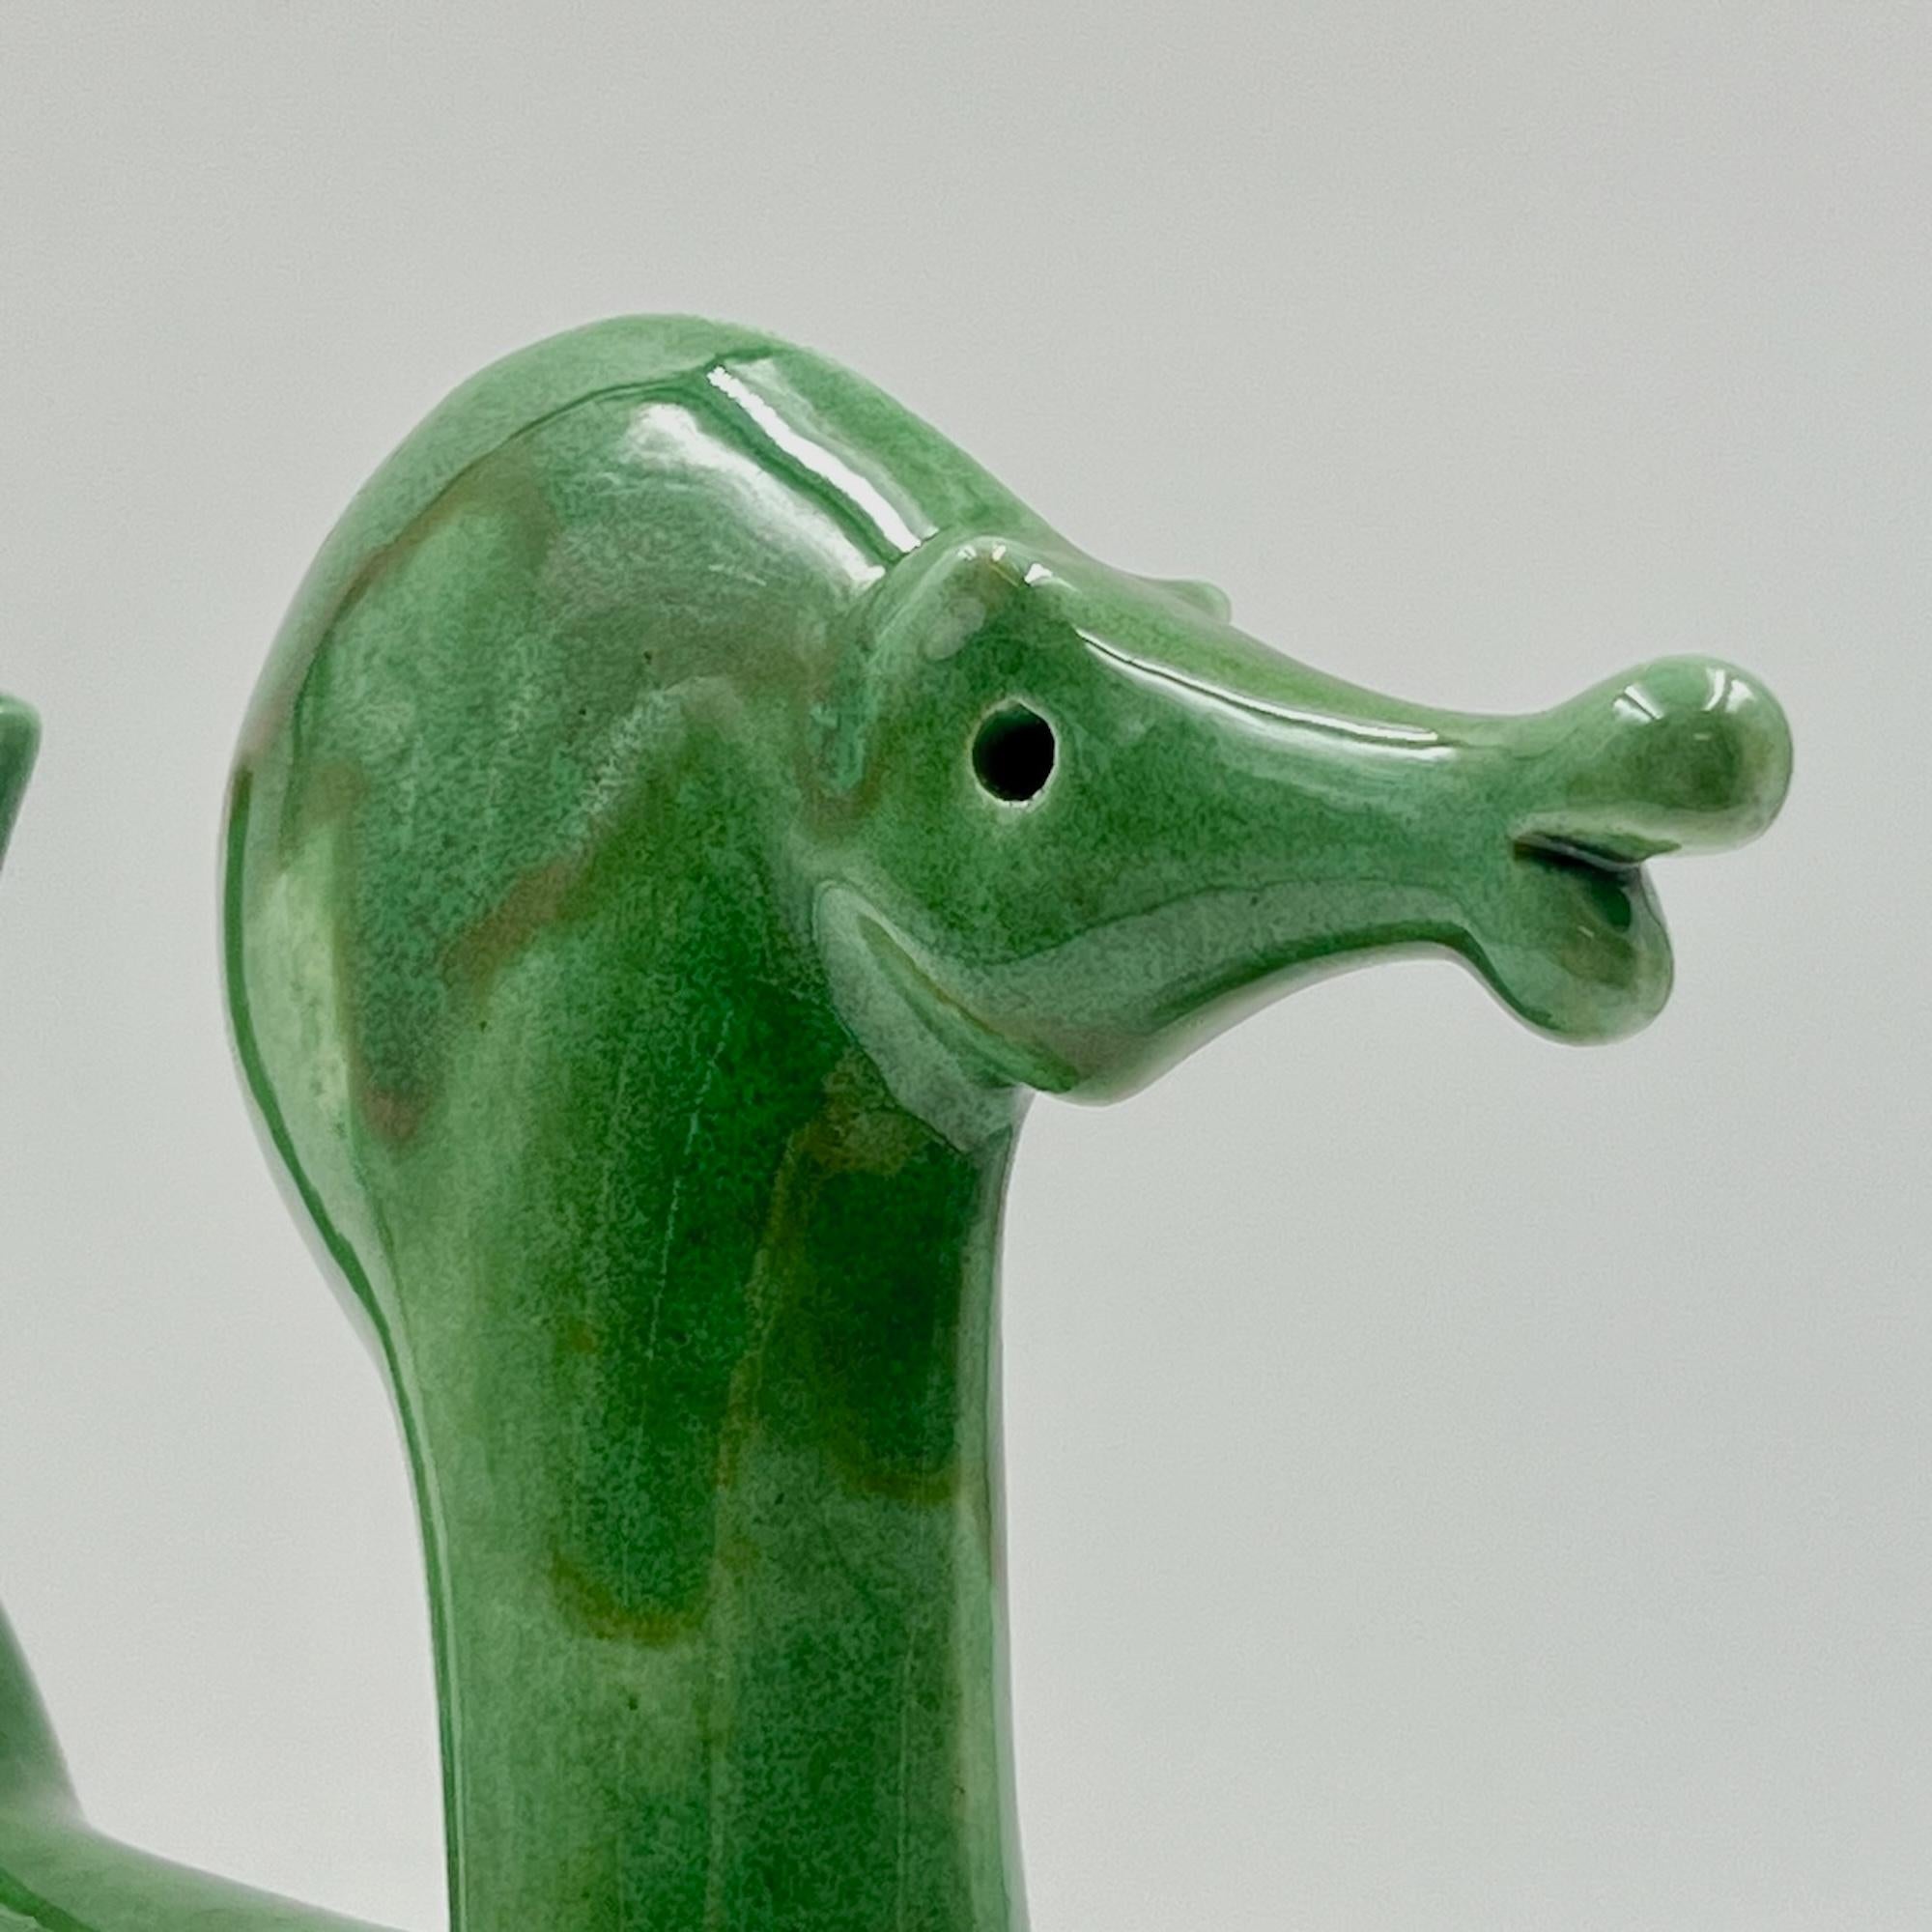 Green Ceramic Horse Figurine - 1970s Handmade Sculpture by Roberto Rigon Italy  For Sale 2